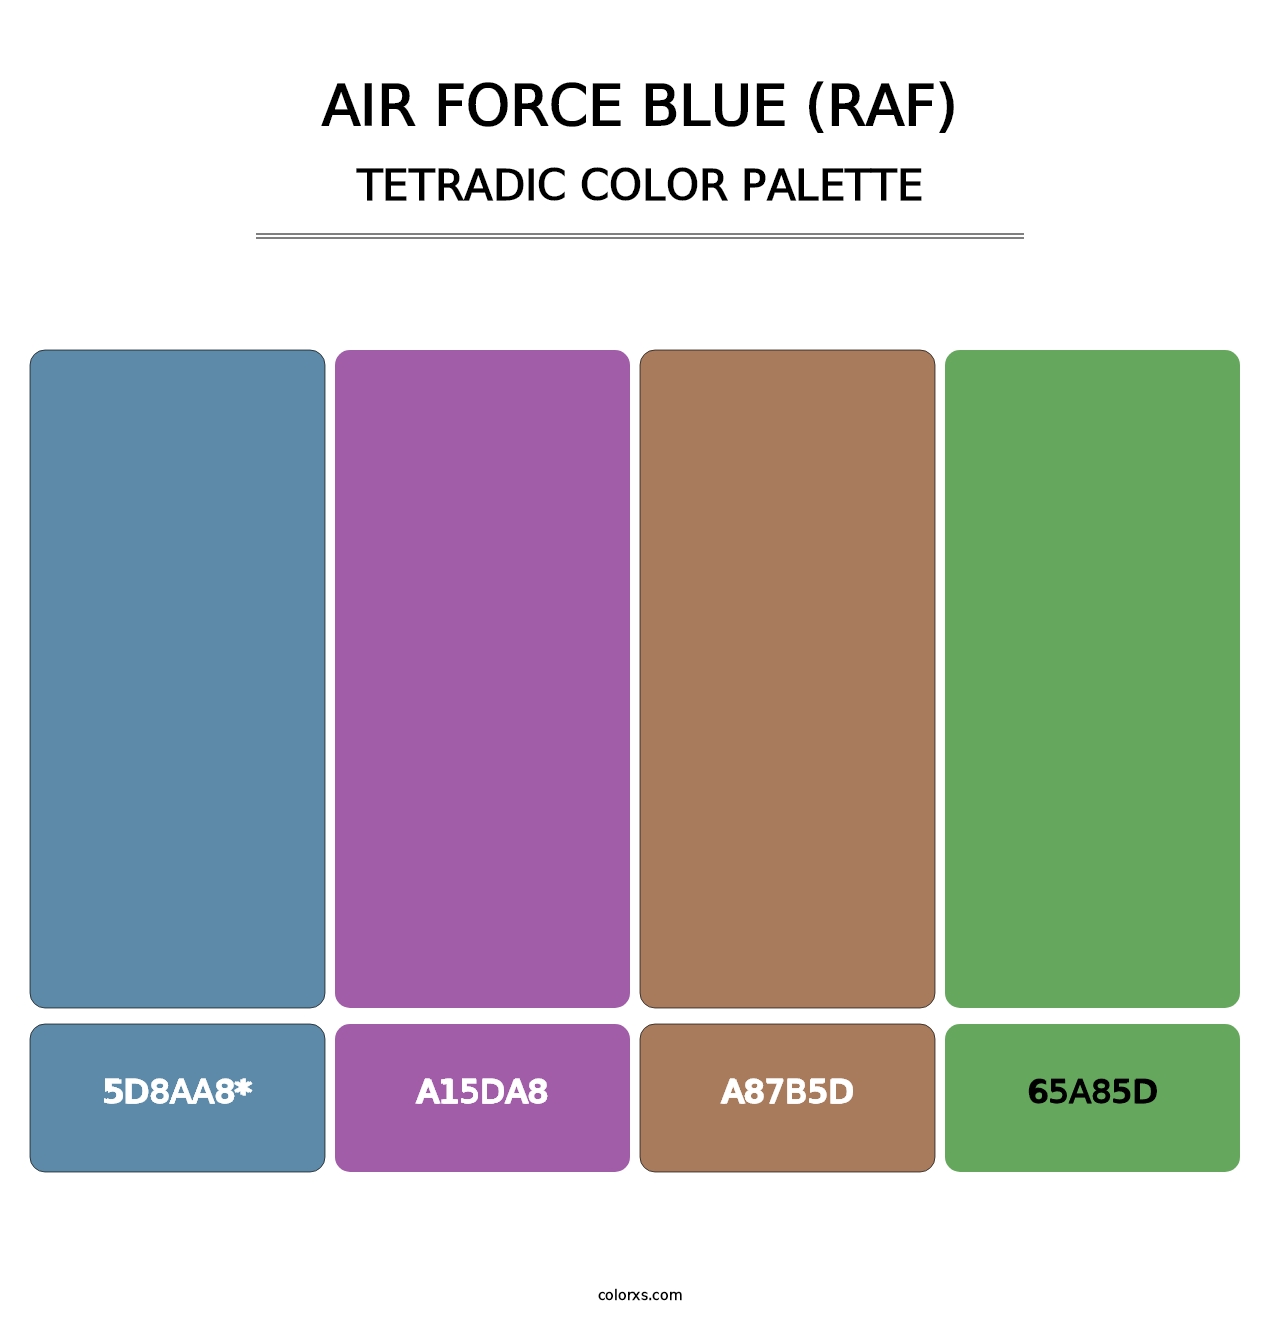 Air Force Blue (RAF) - Tetradic Color Palette